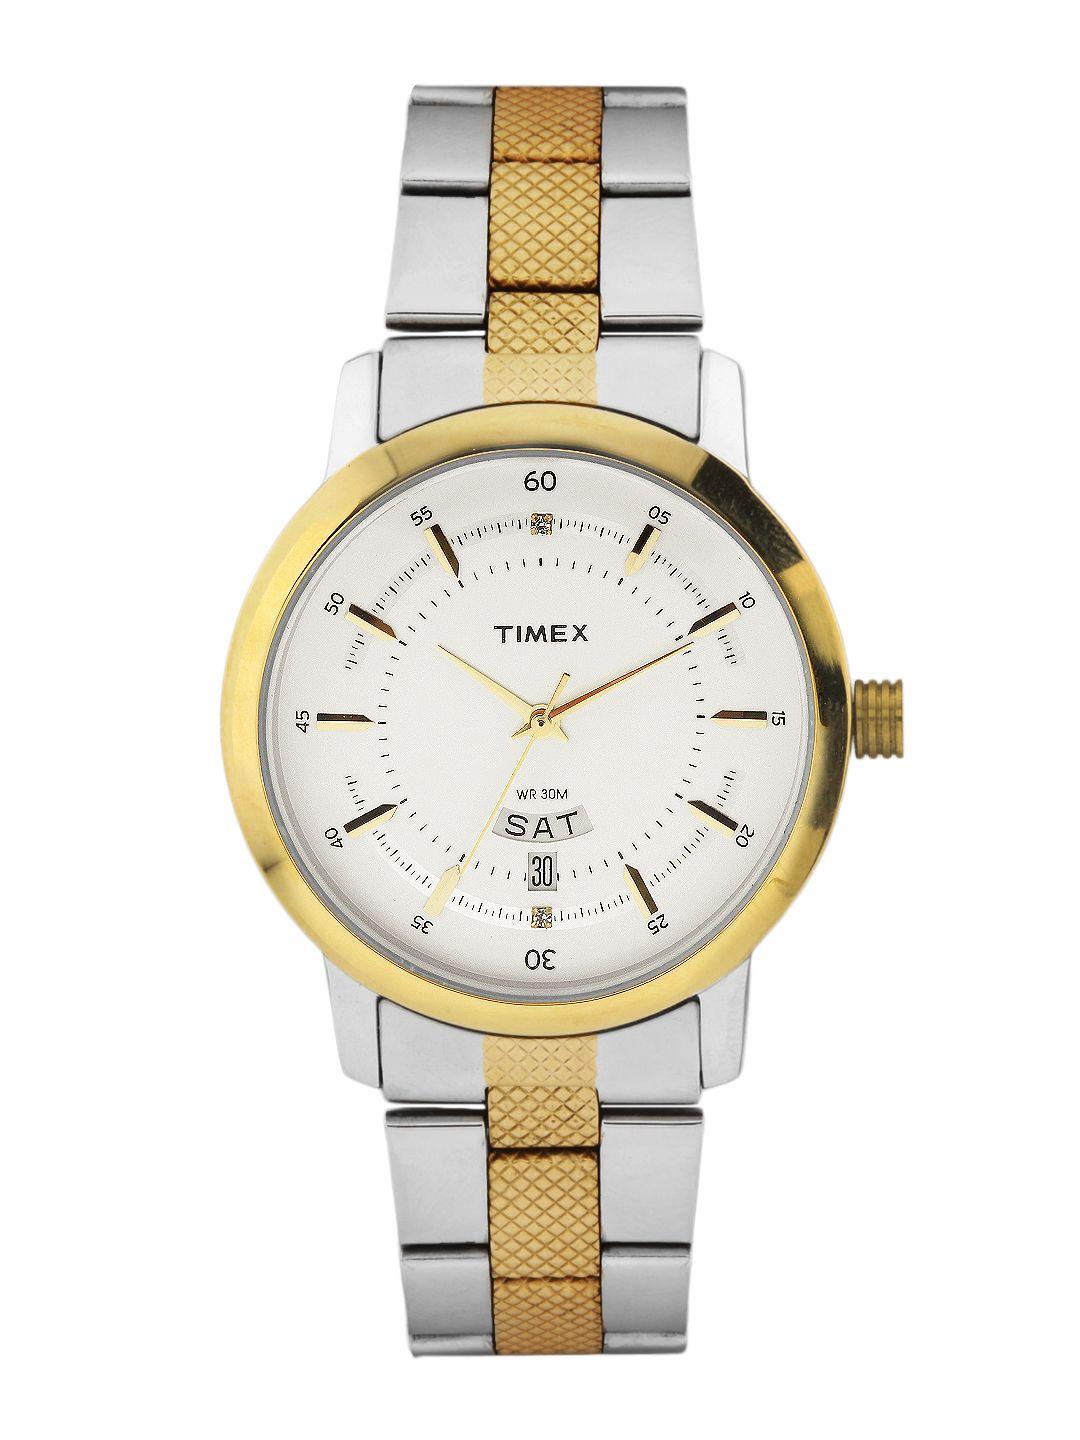 timex men white dial watch g910-bdl